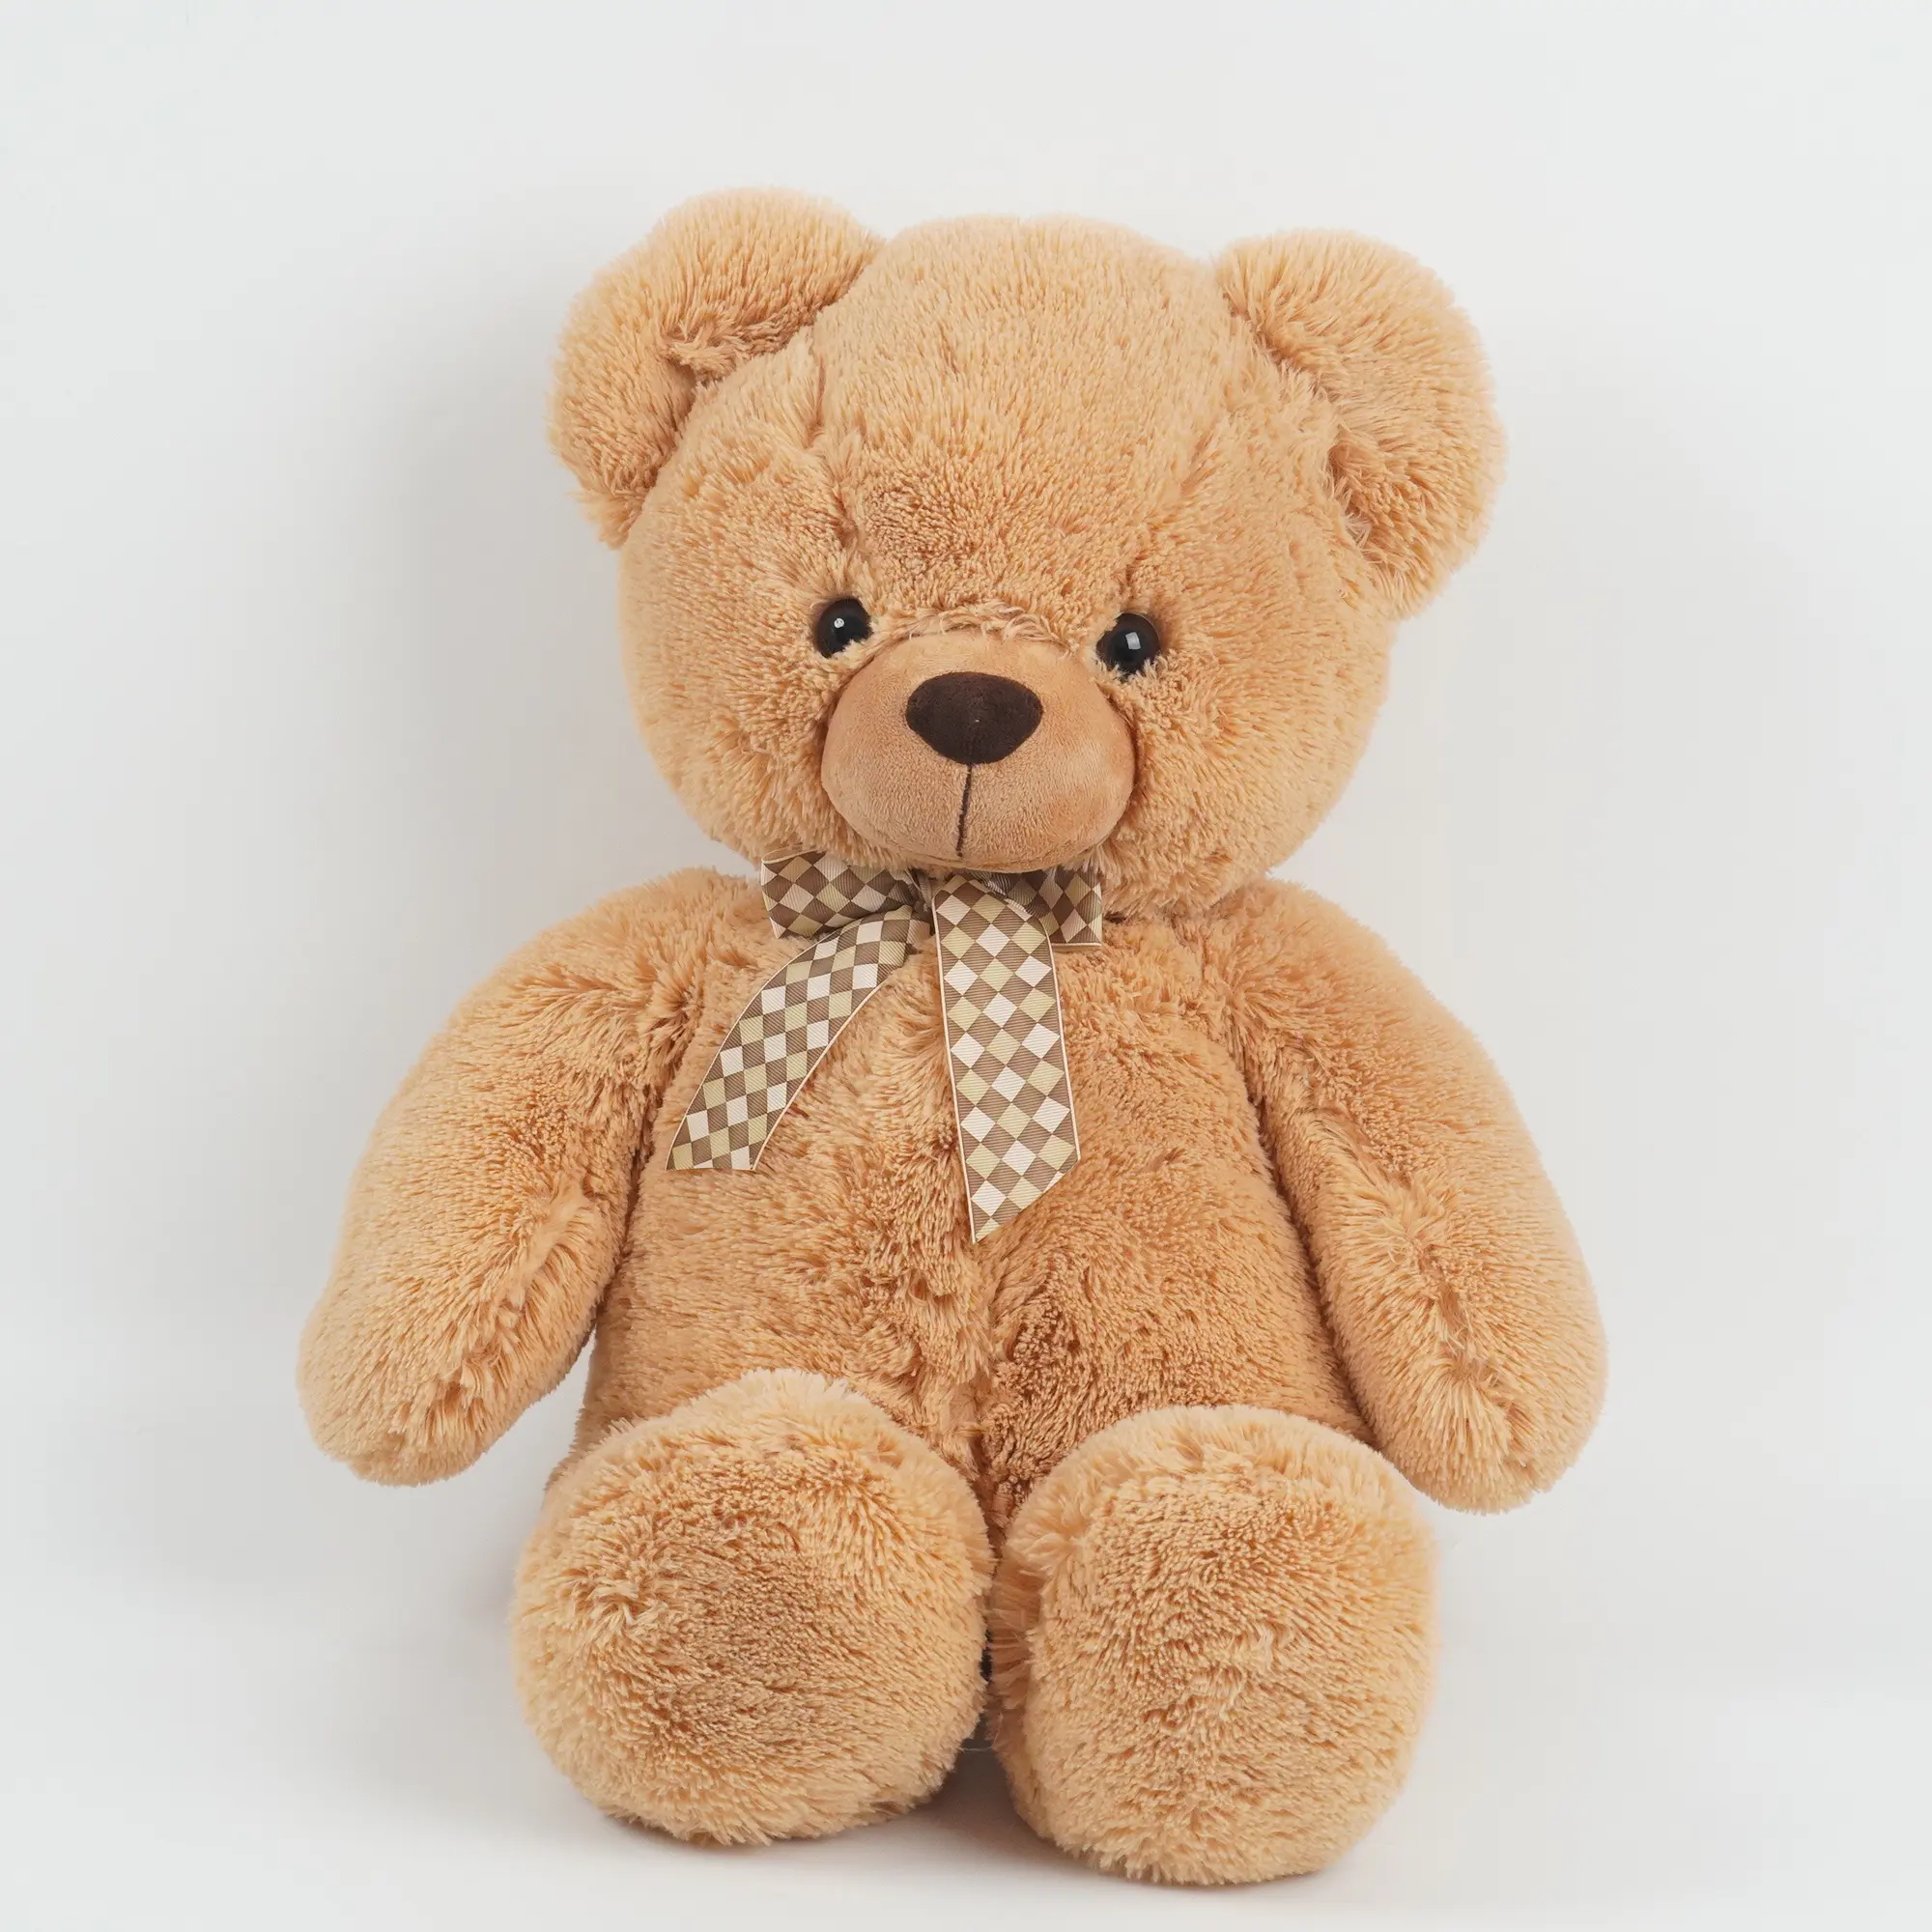 Hot Sale Wholesale Giant big cute teddy bear skin soft unstuffed 100cm plush bear skin toy gift for promotion